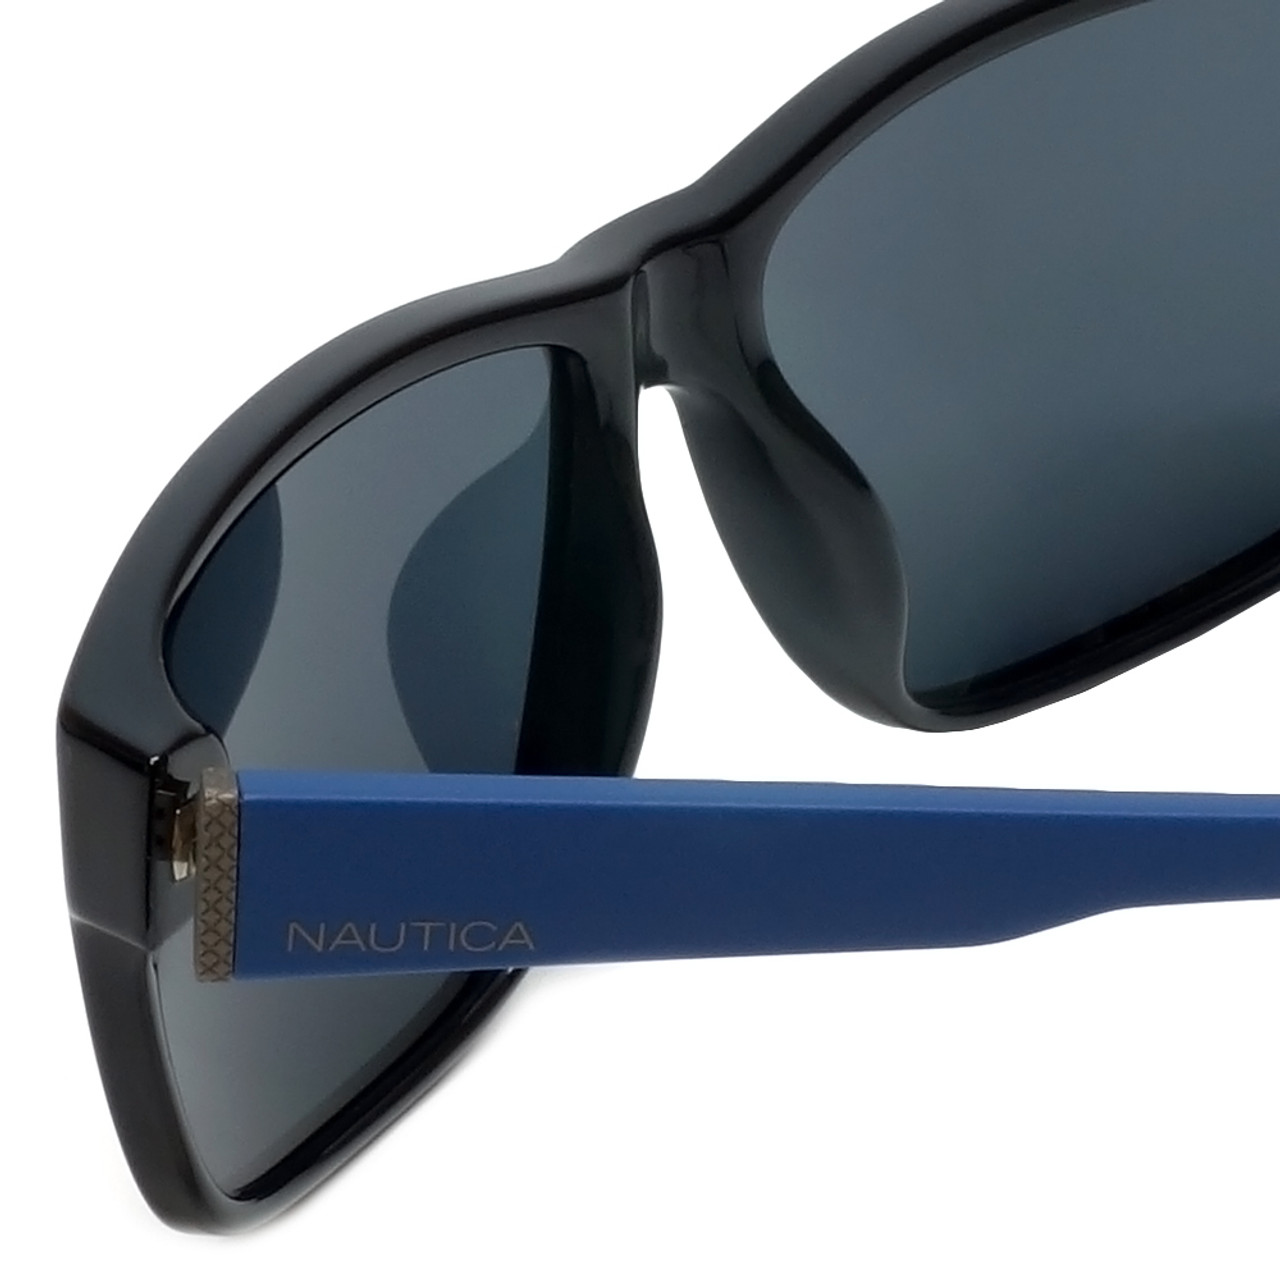 Nautica Designer Sunglasses N6203S-001 in Black with Grey Lens